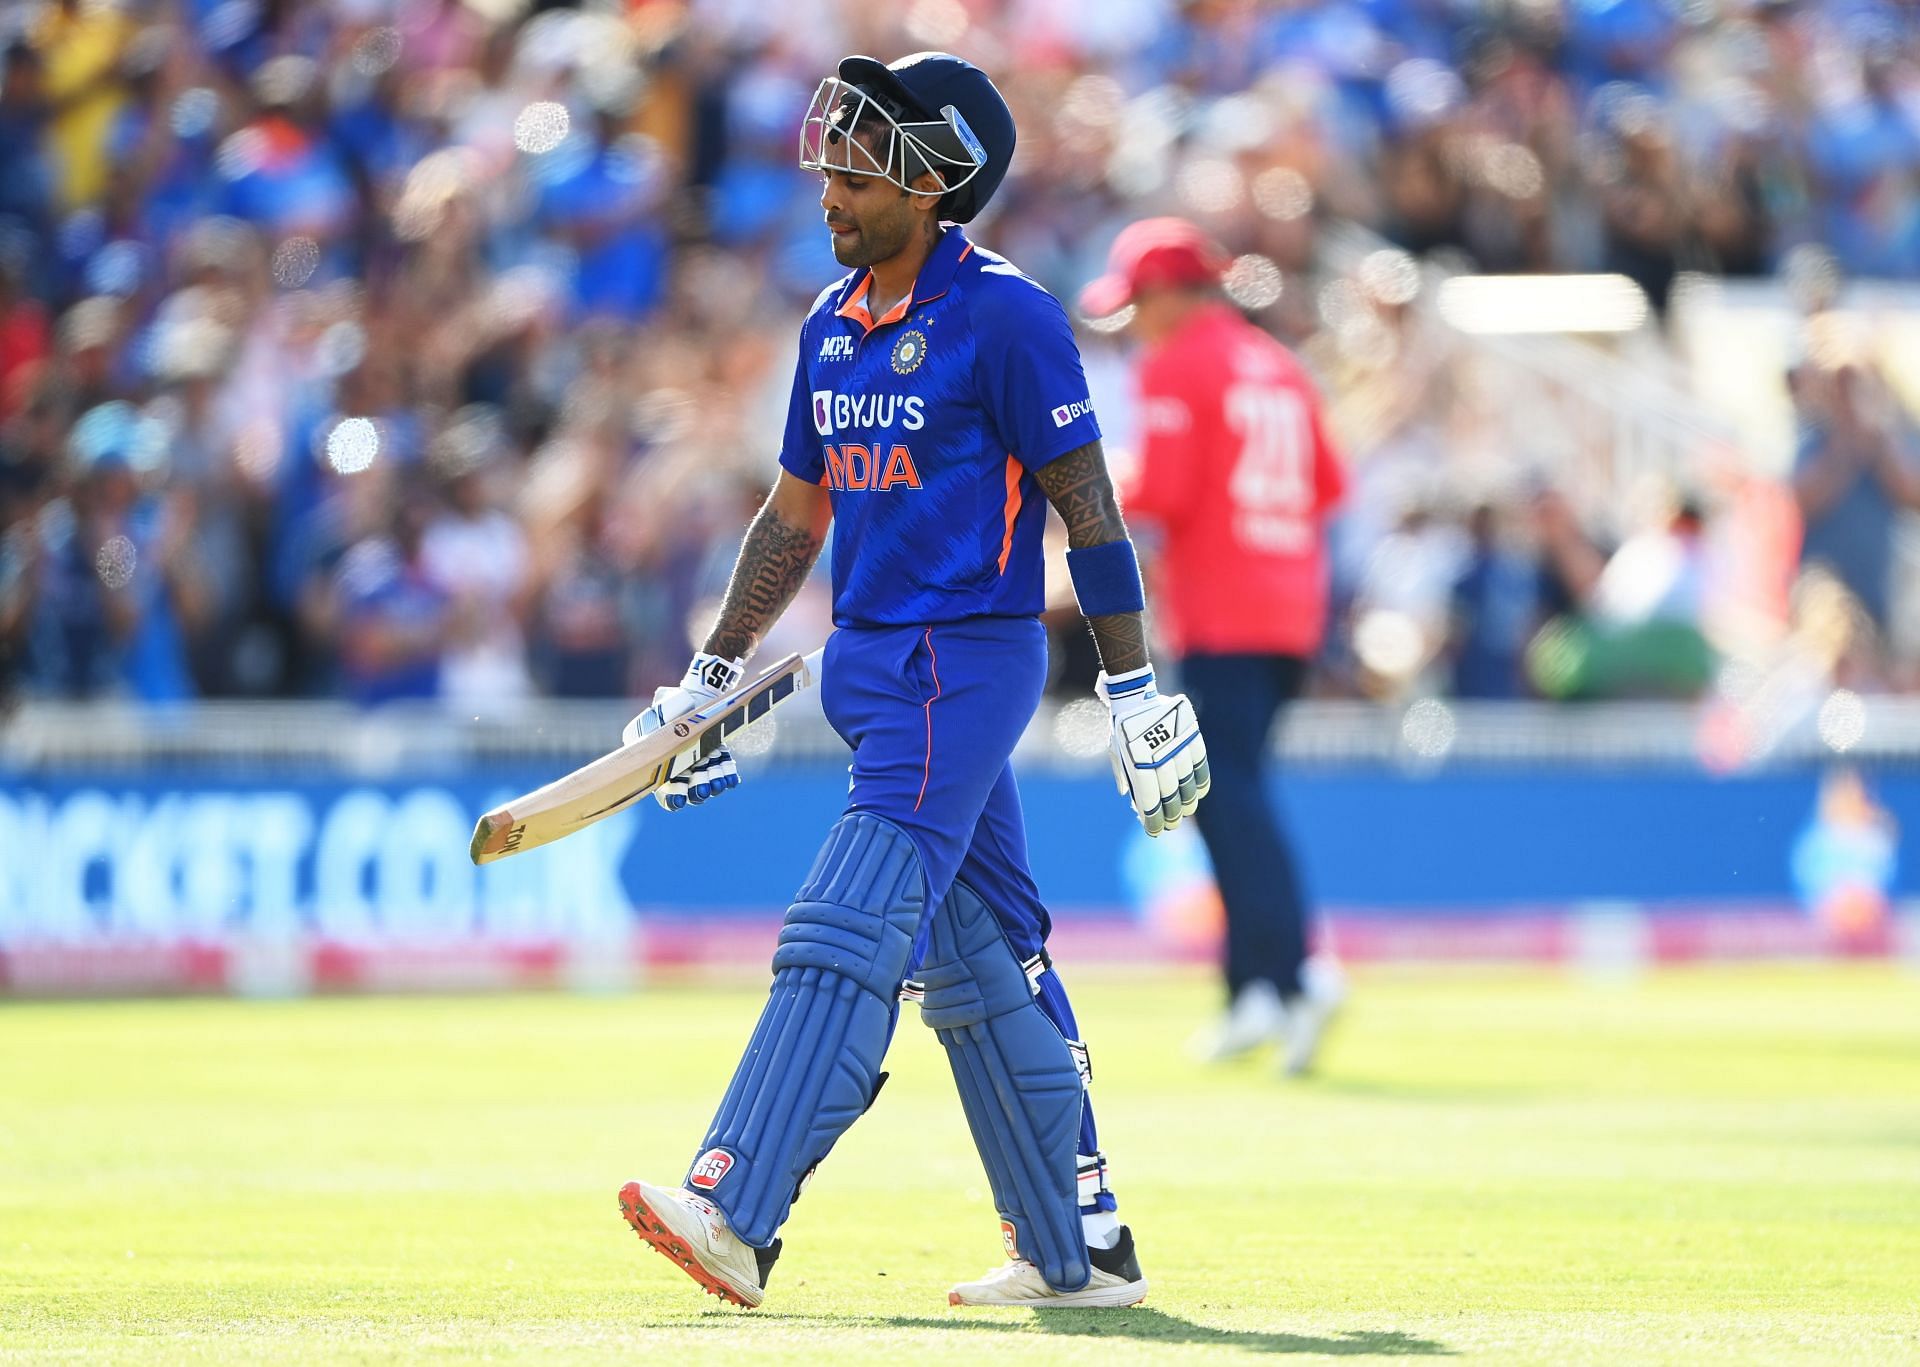 Suryakumar Yadav displayed his wide array of shots against England